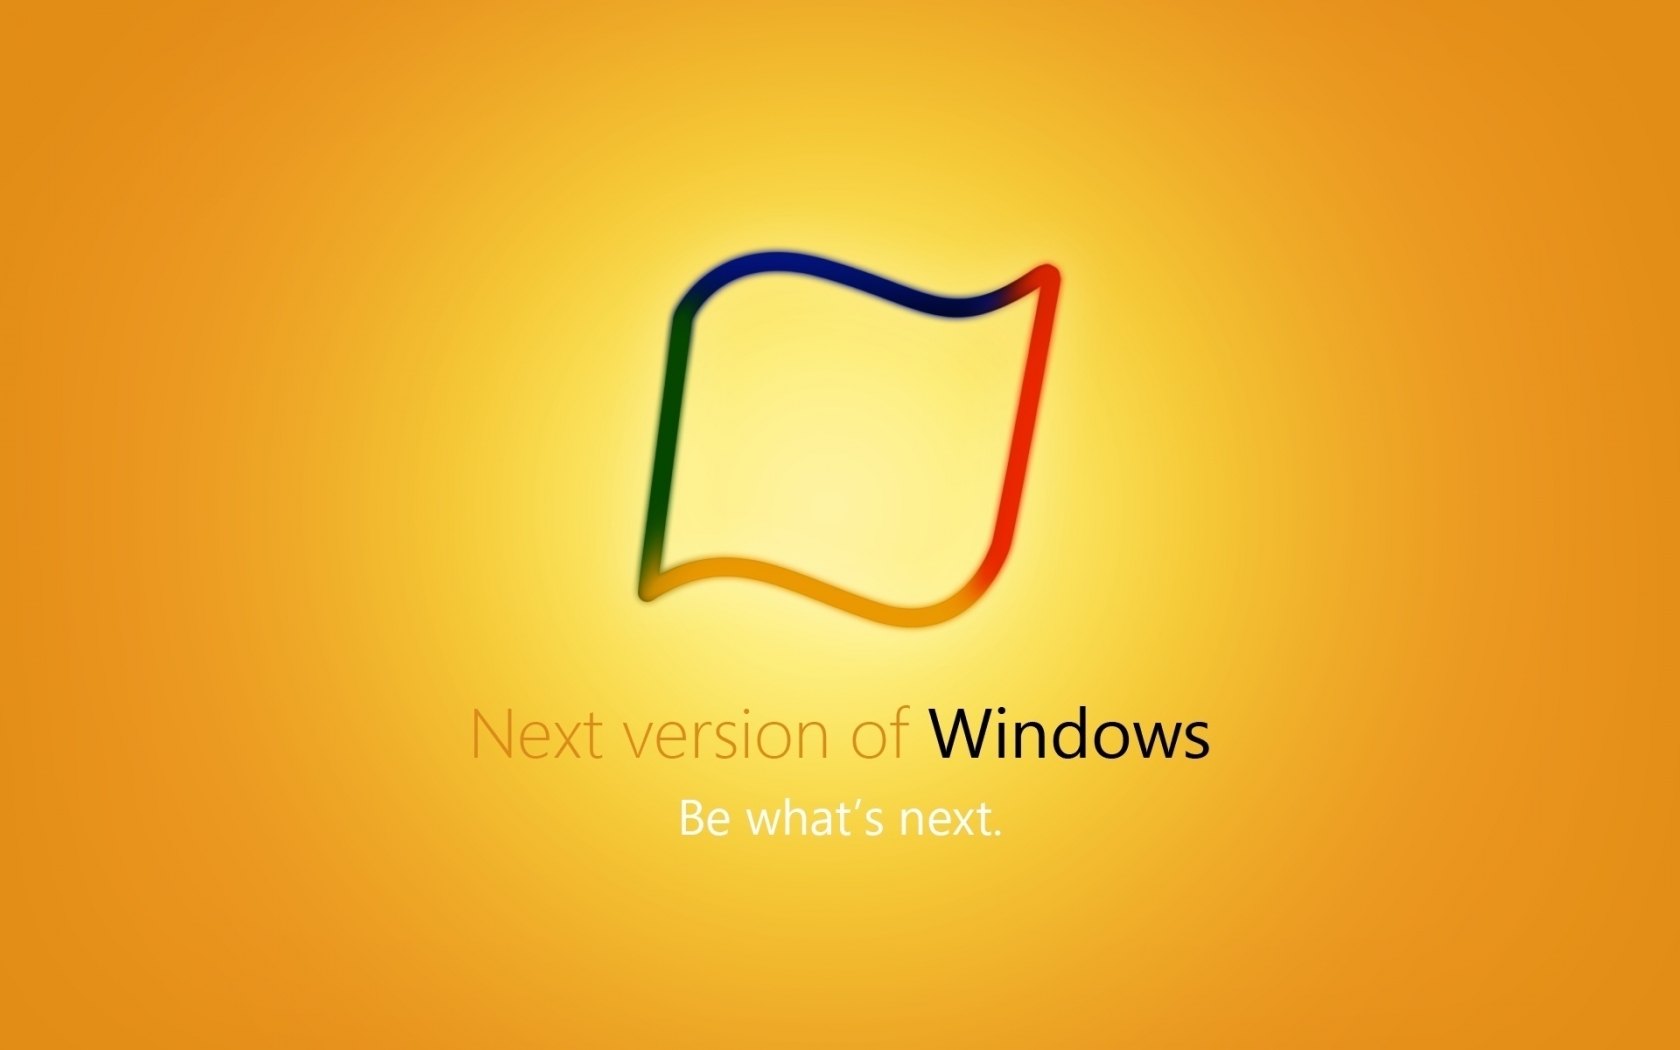 Next Windows 8 for 1680 x 1050 widescreen resolution